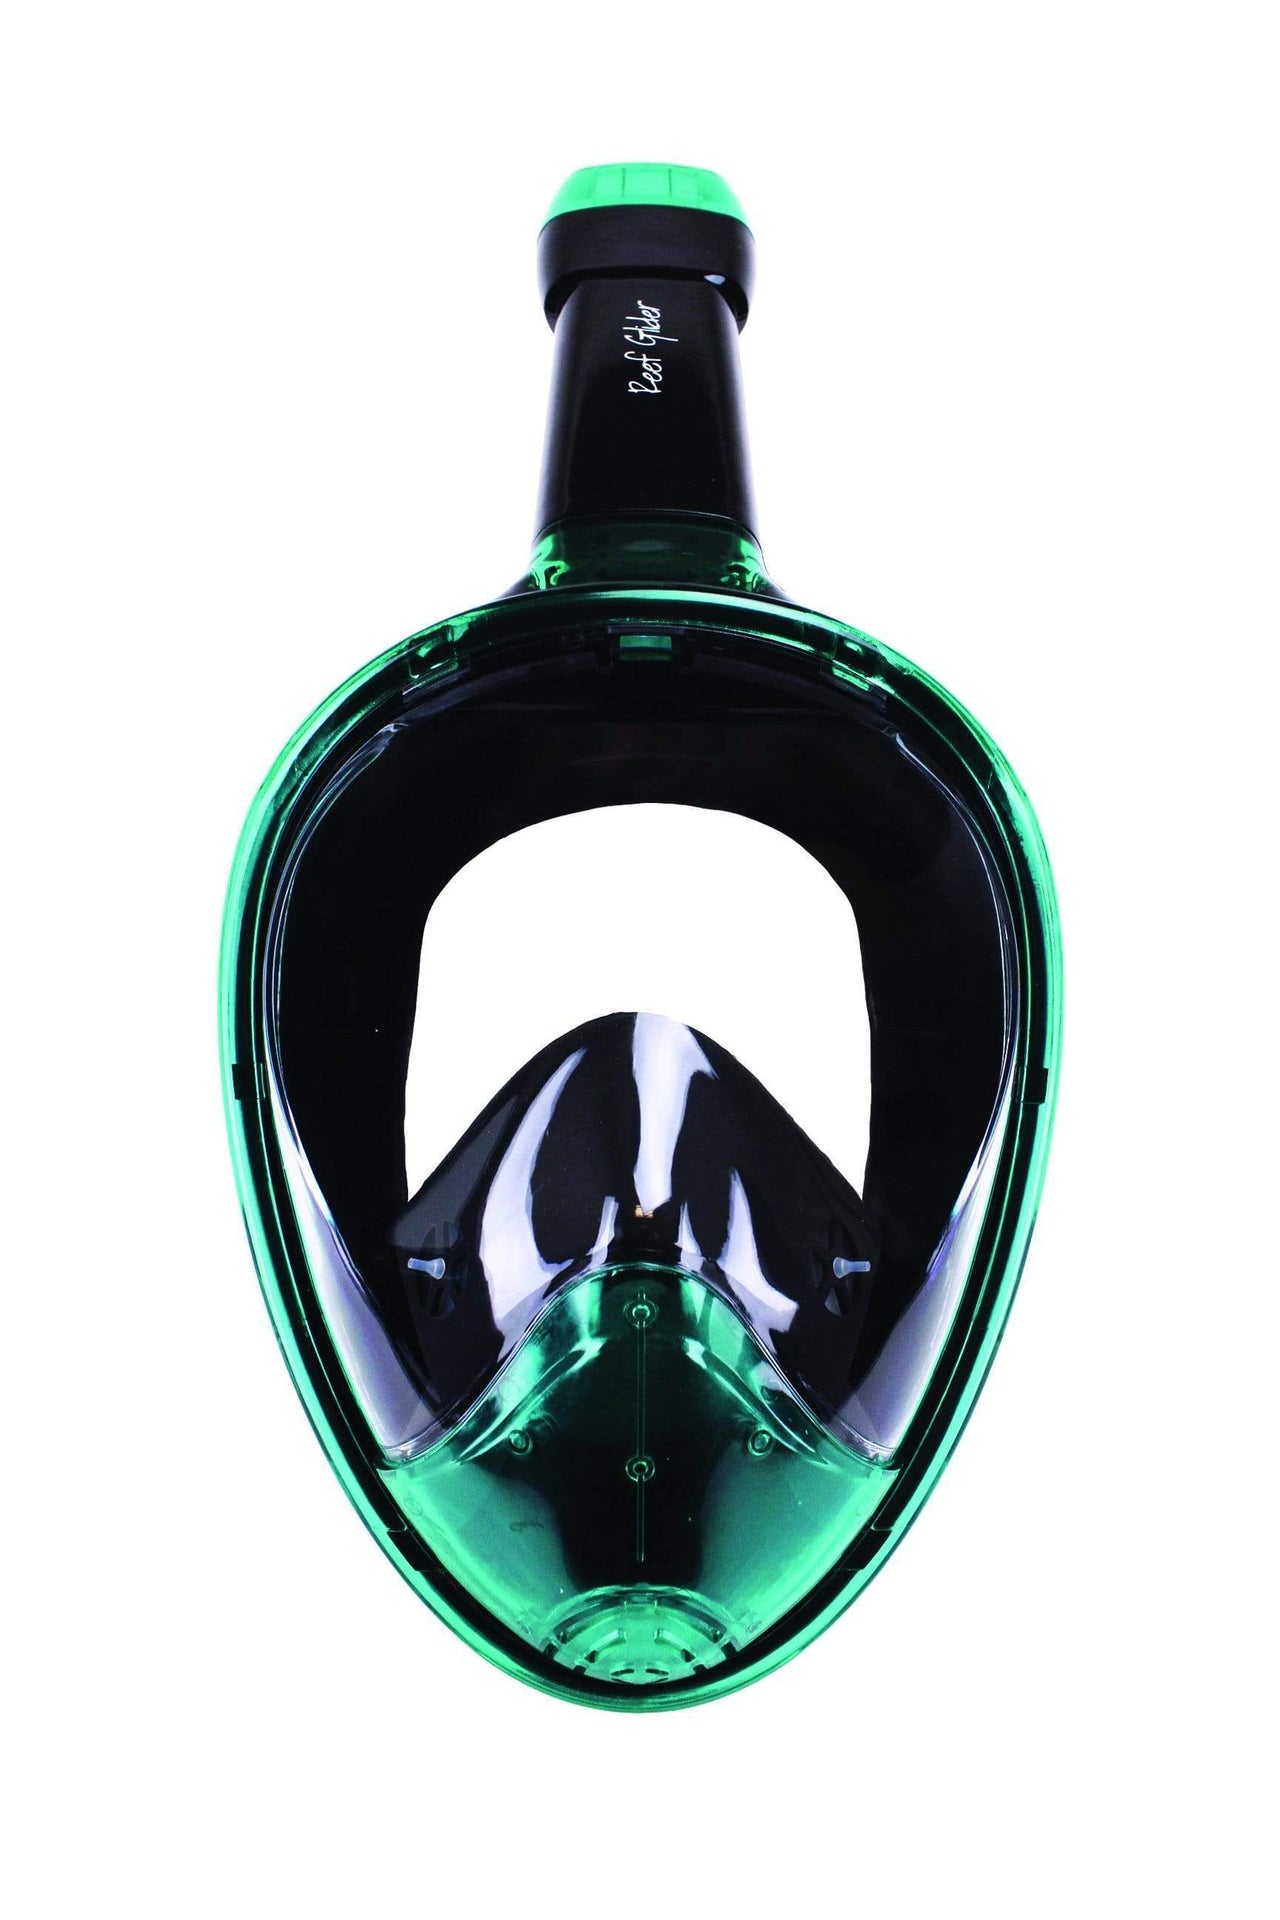 Reef Glider Full Face Snorkel Mask Set with Action Cam Mount black emerald